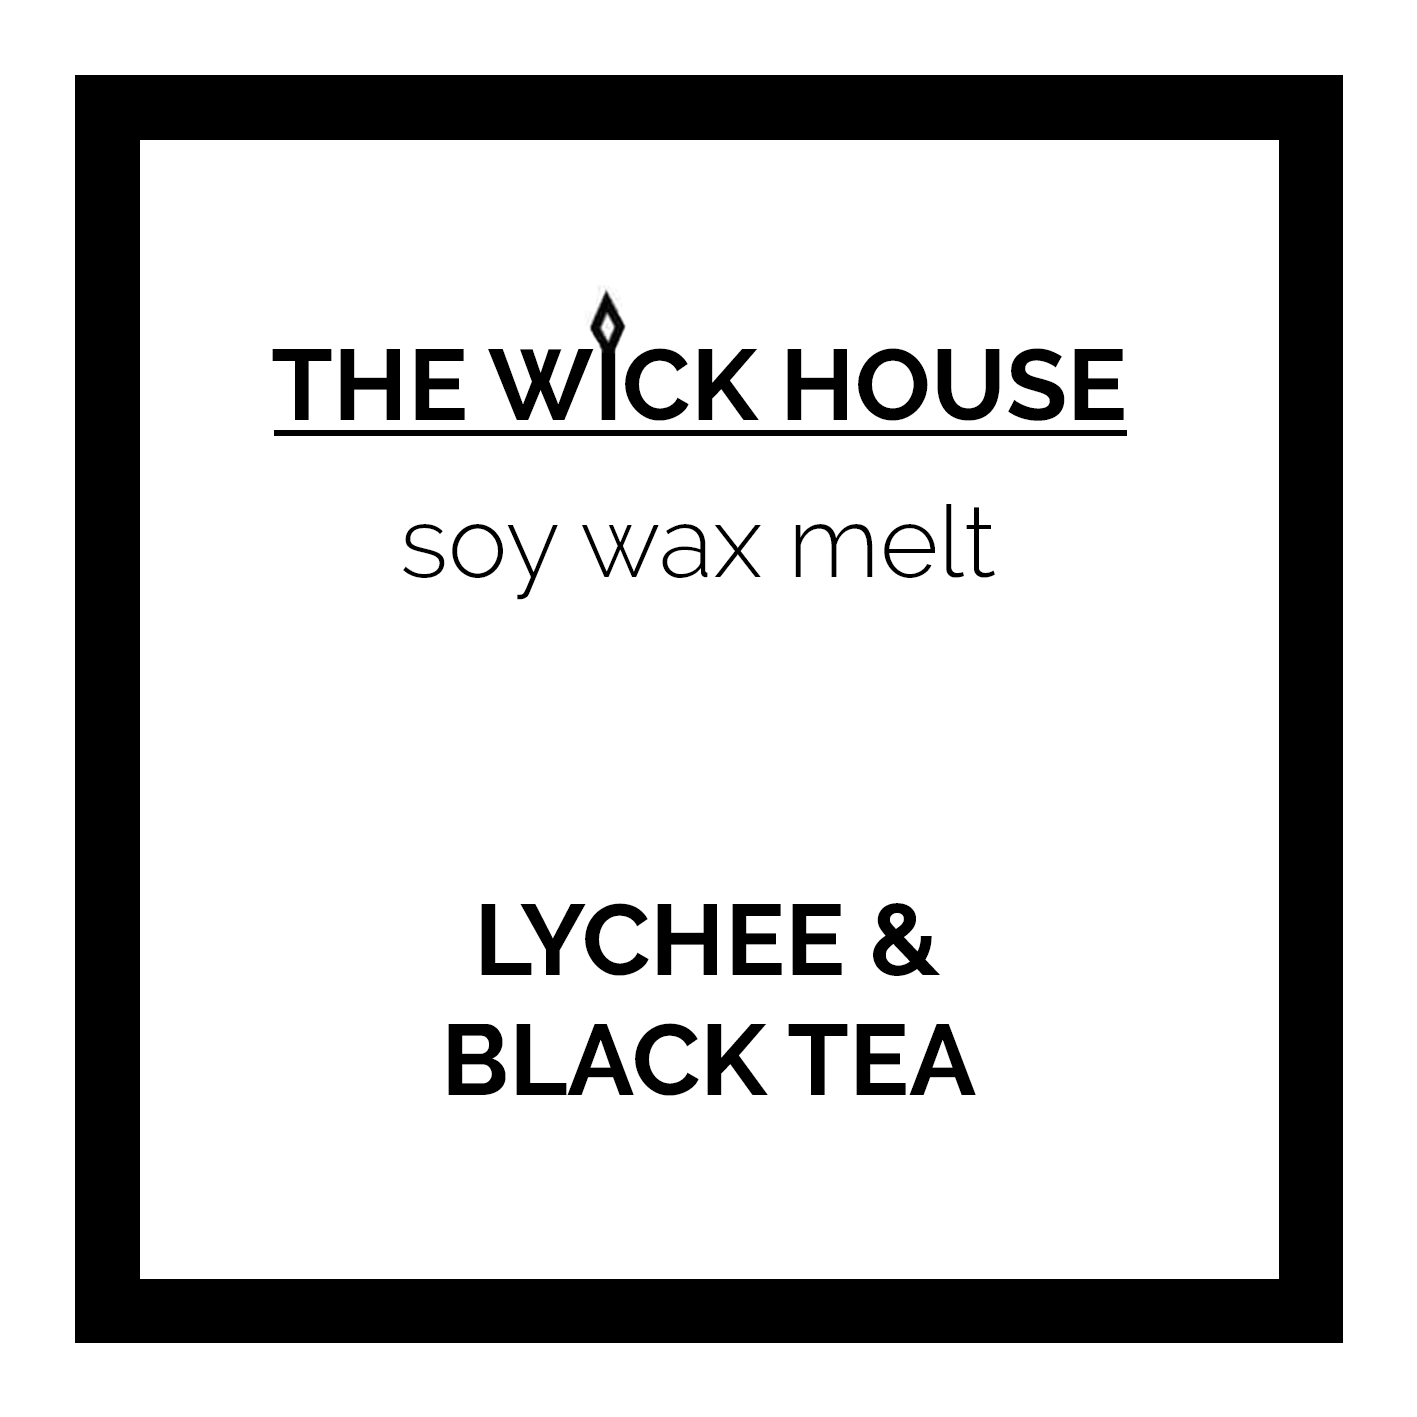 Lychee & Black Tea